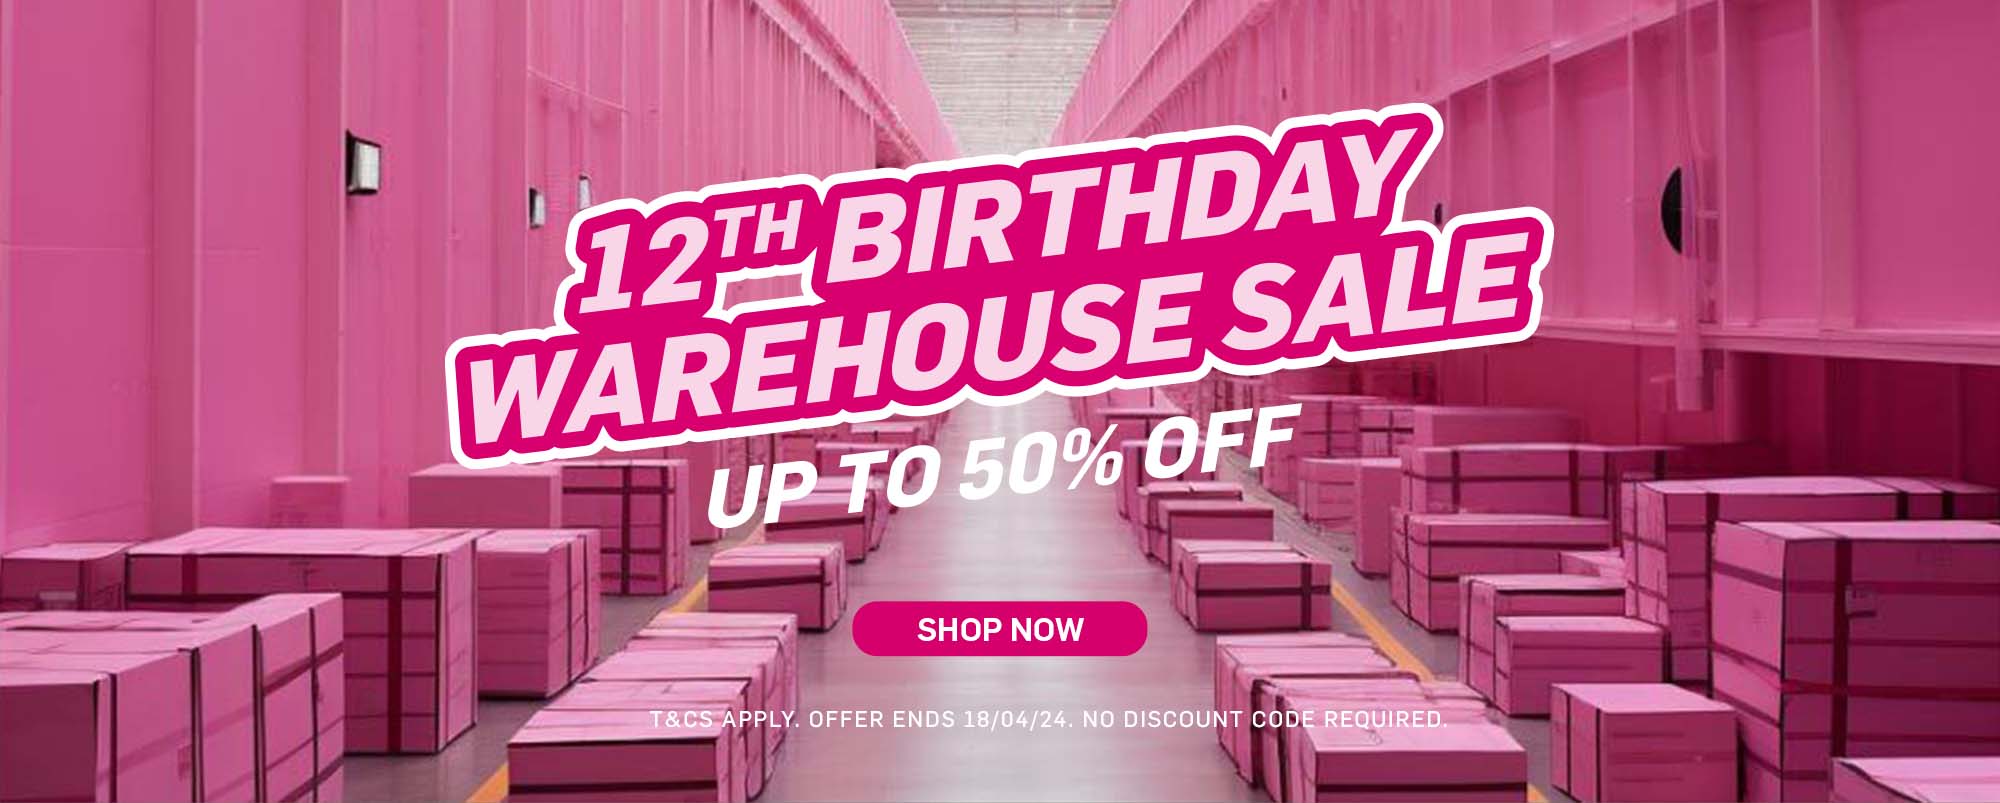 Warehouse_sale_Web_banner_18th.jpg